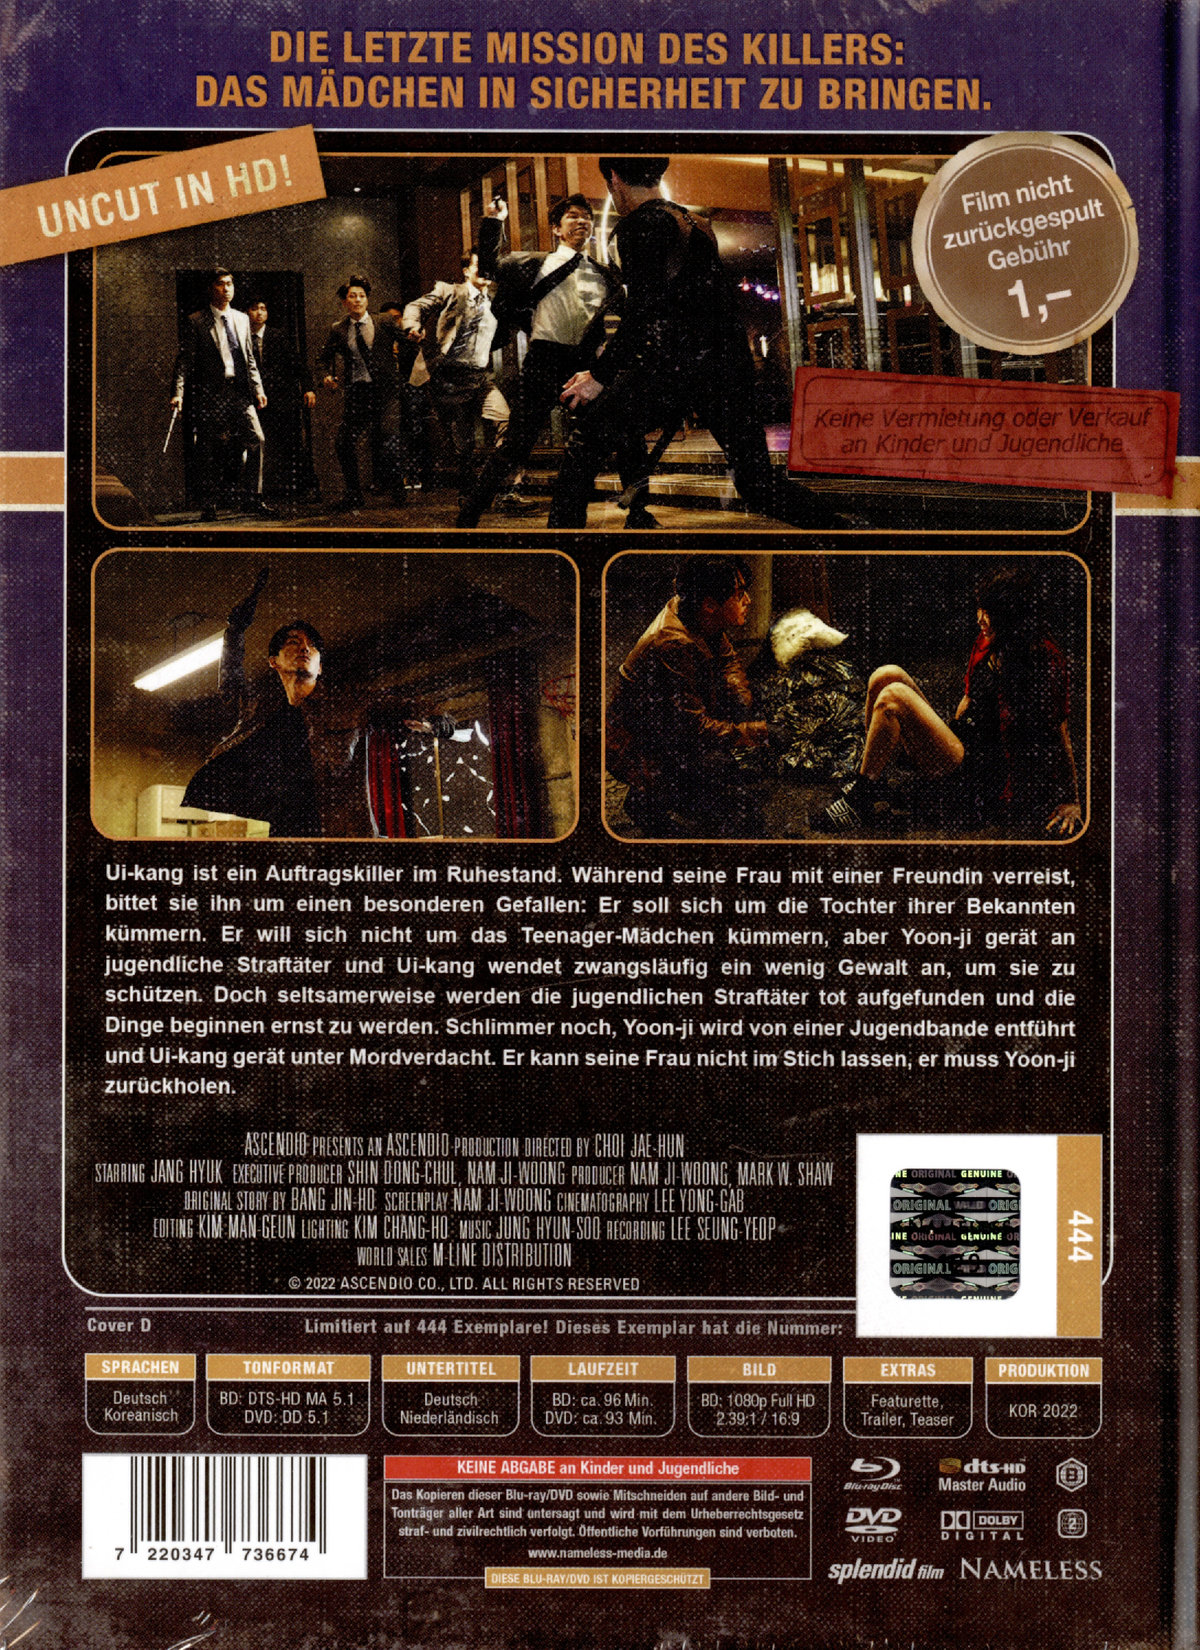 The Killer - Someone Deserves to Die - Uncut Mediabook Edition (DVD+blu-ray) (D)